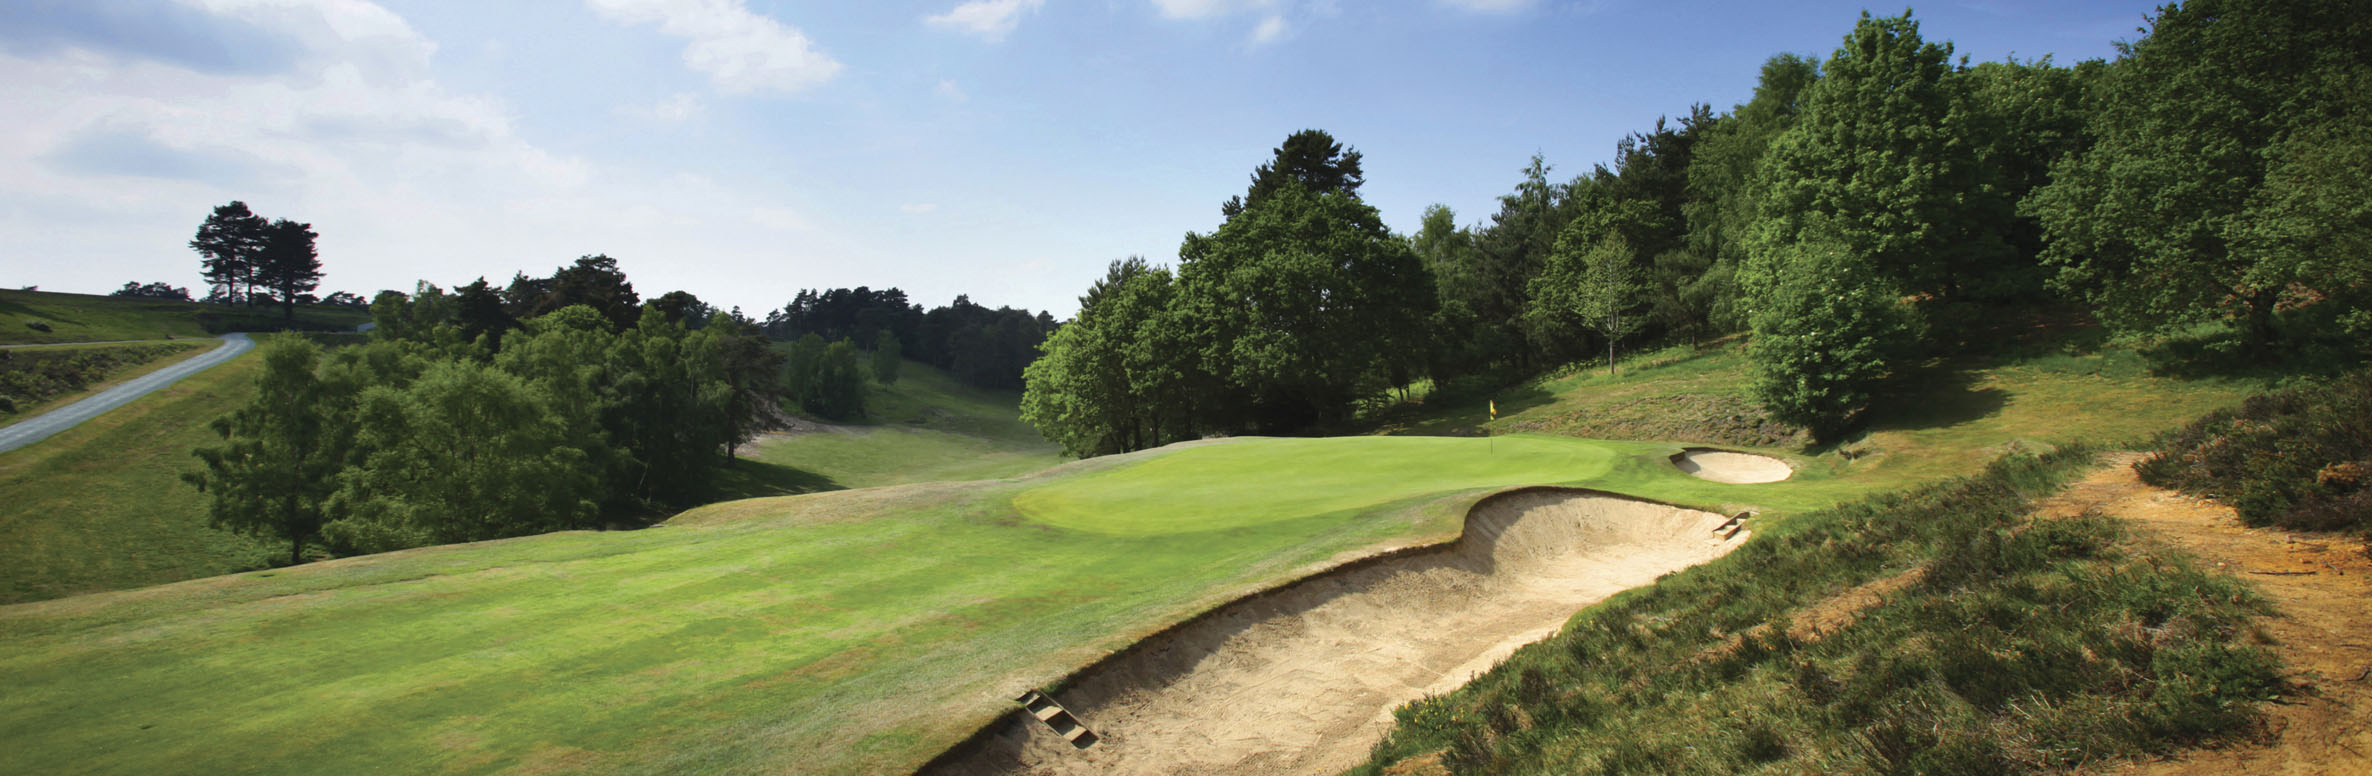 Golf Course Image - Hindhead Golf Club No. 3